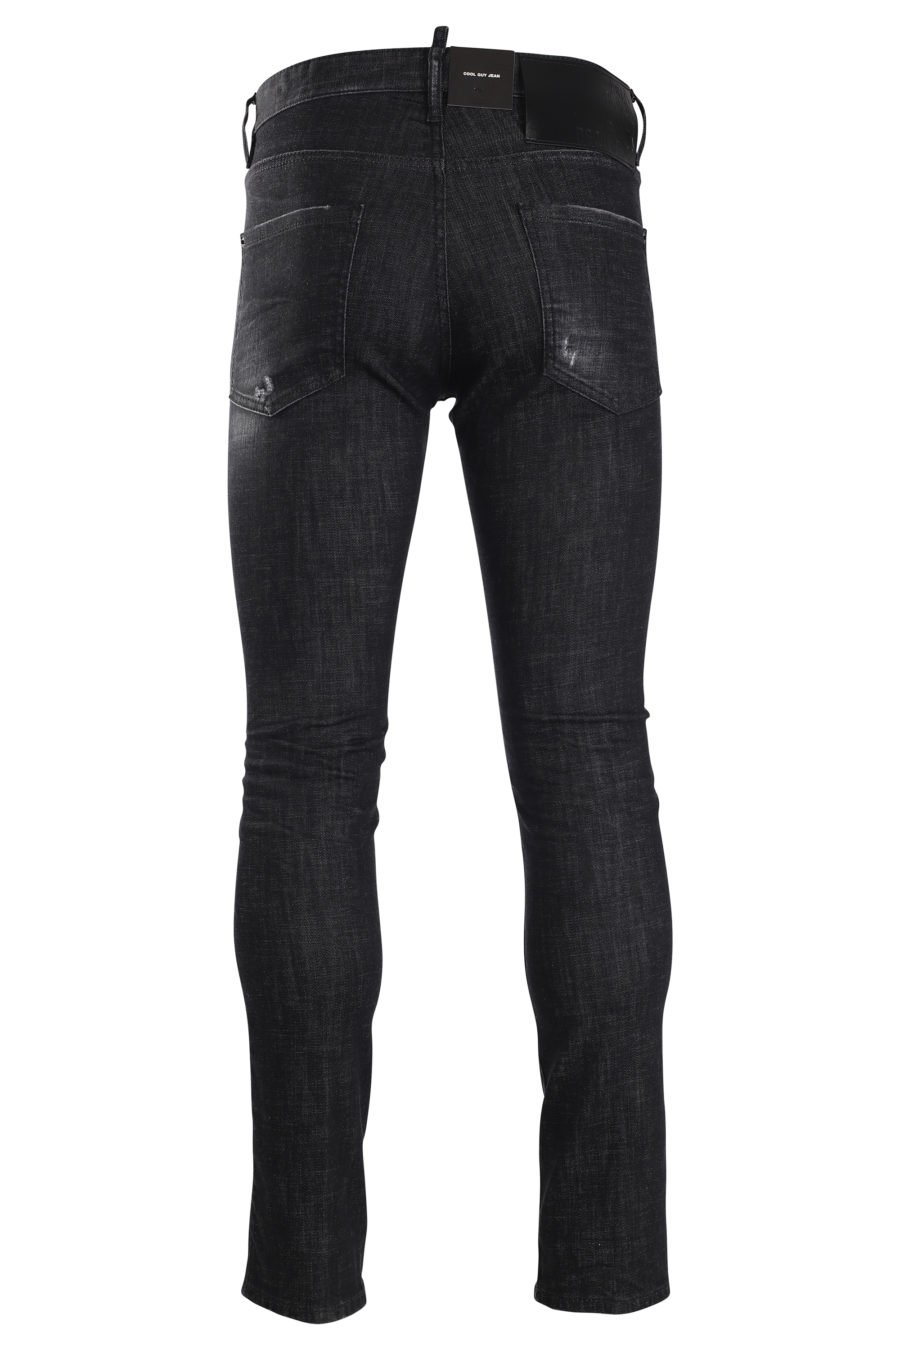 Jeans "ibra cool guy" schwarz - IMG 9981